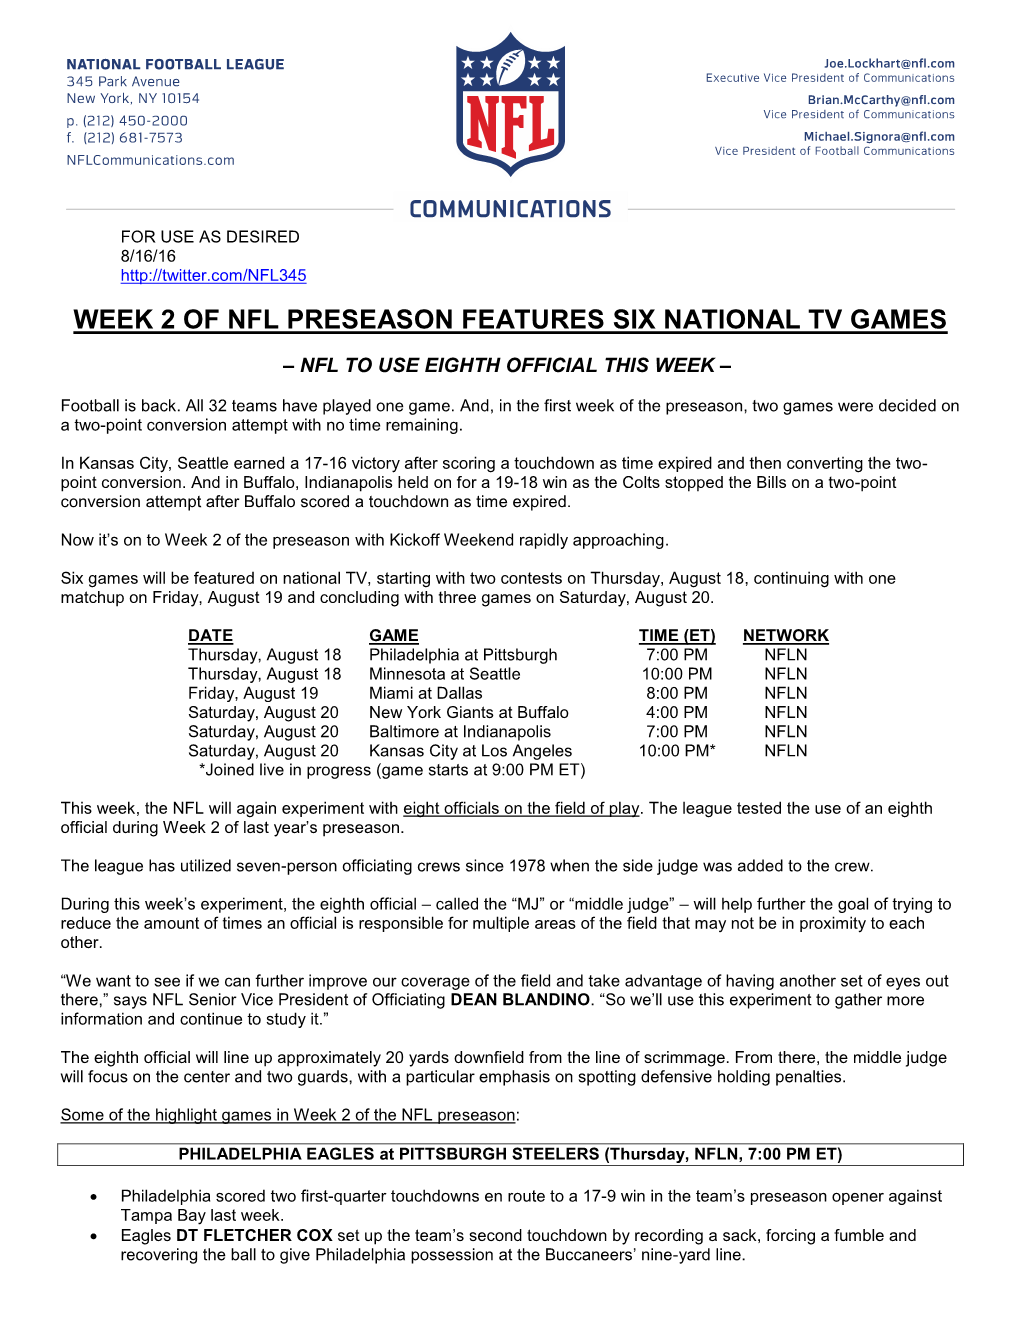 Week 2 of Nfl Preseason Features Six National Tv Games